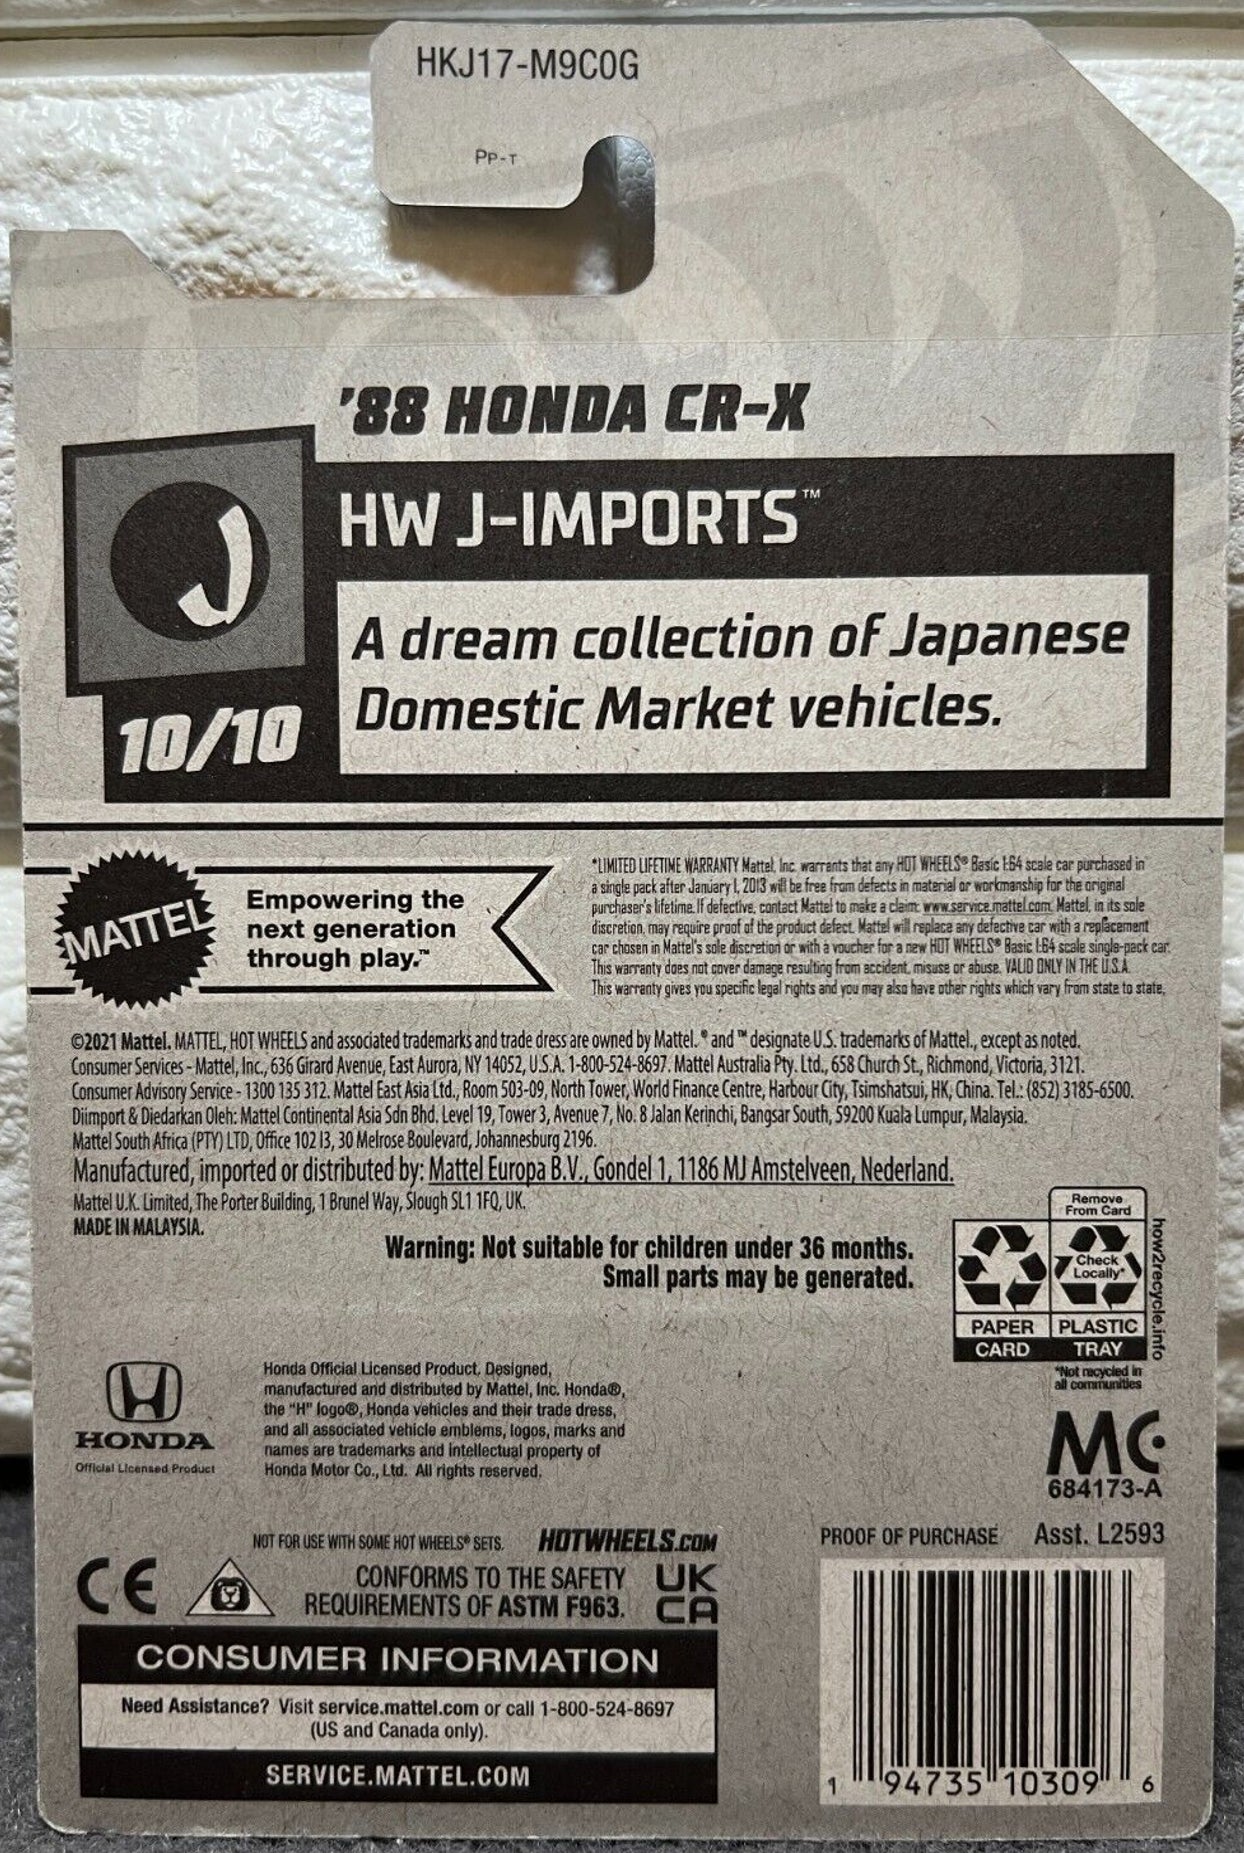 Hot Wheels '88 Honda CR-X HW J-Imports HKJ17